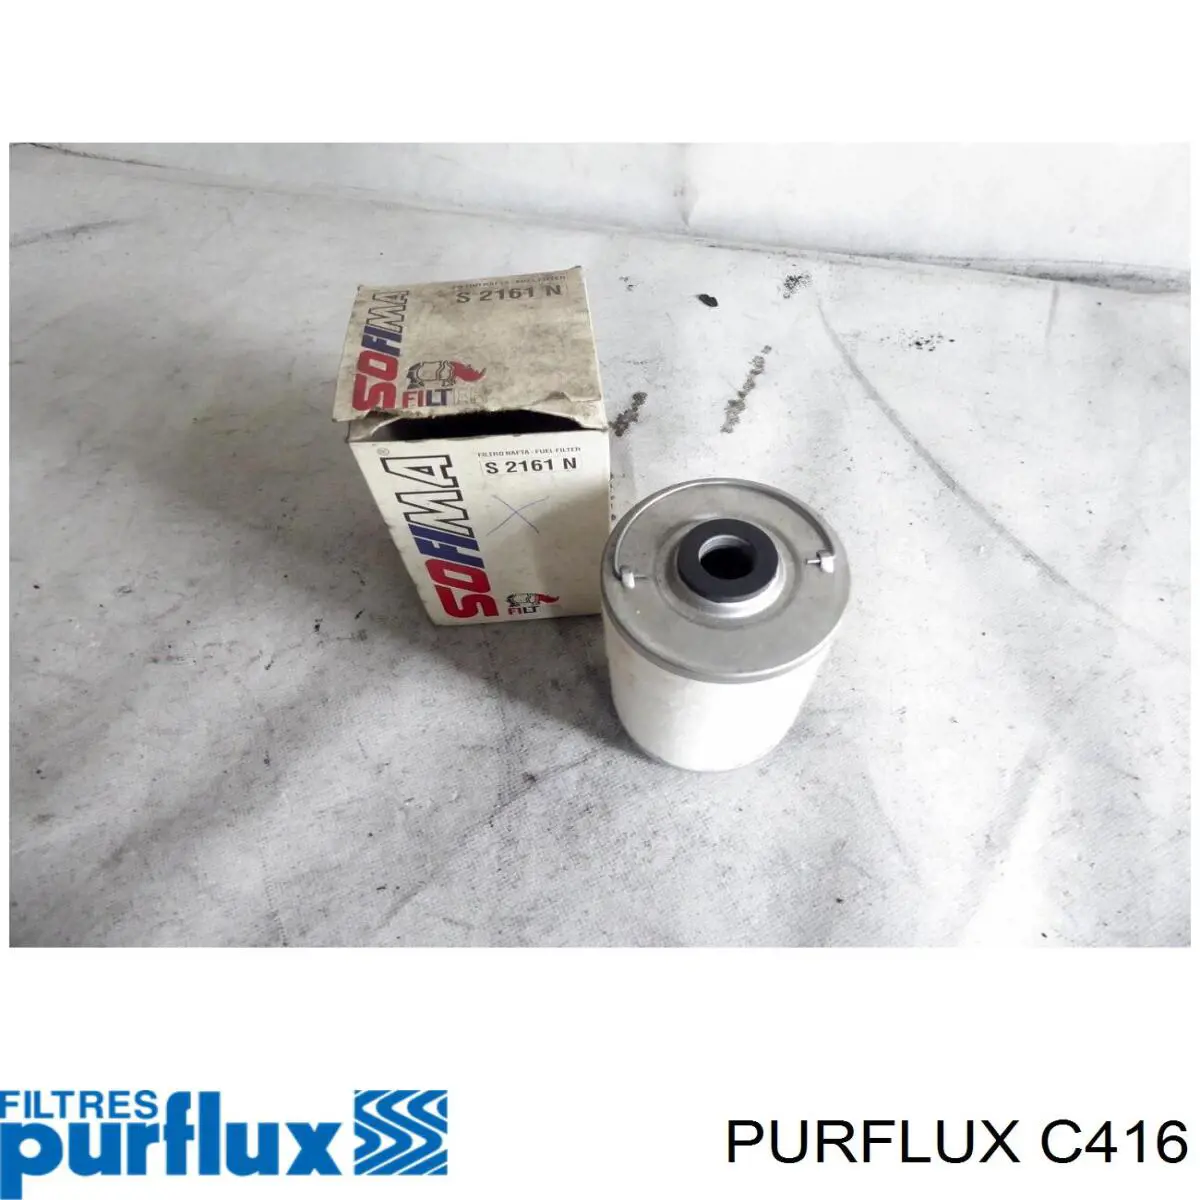 C416 Purflux filtro combustible